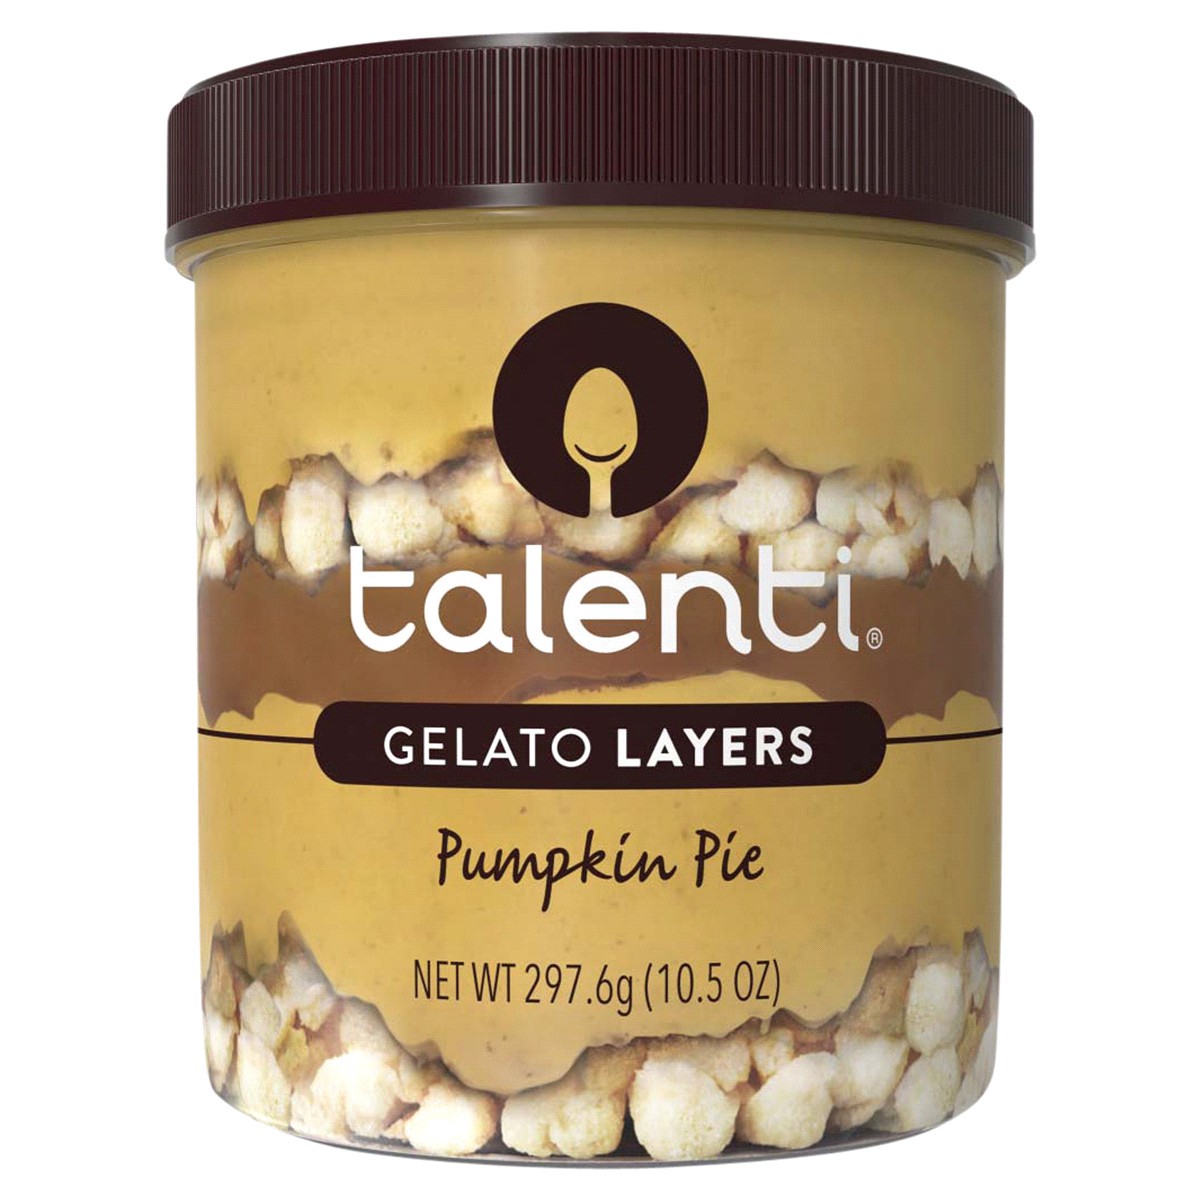 slide 6 of 9, Talenti Gelato Layers Double Lemon Pie, 10.19 oz